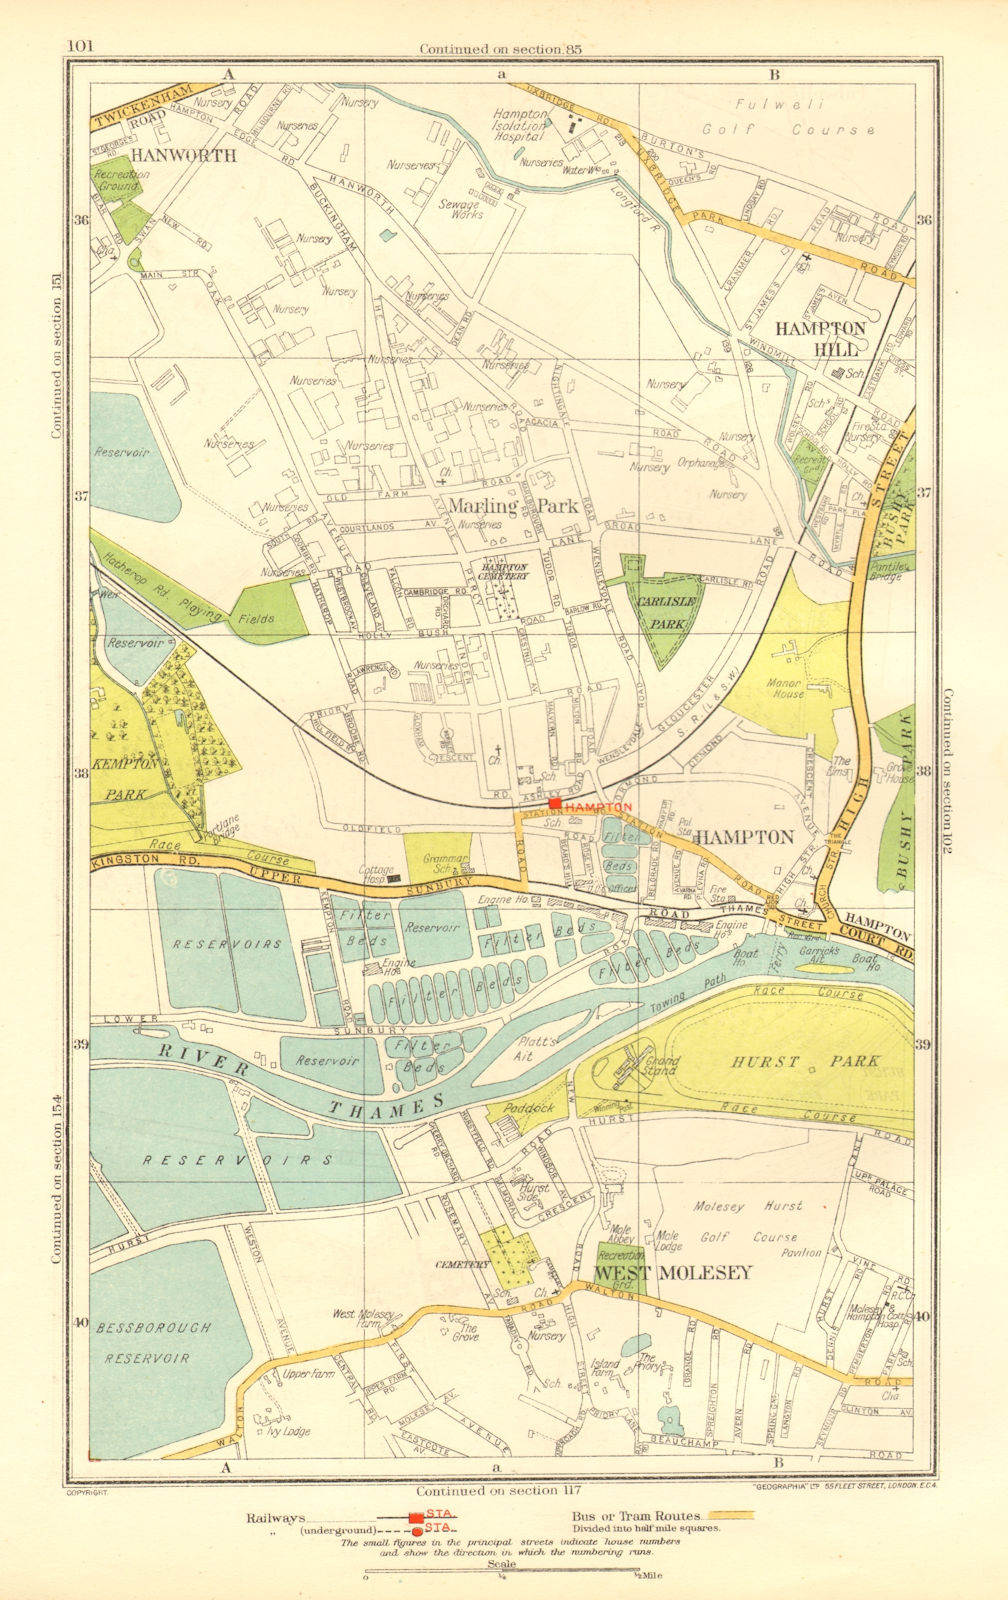 HAMPTON. Hampton Hill Marling Park West Molesey Hanworth Hurst Park 1937 map